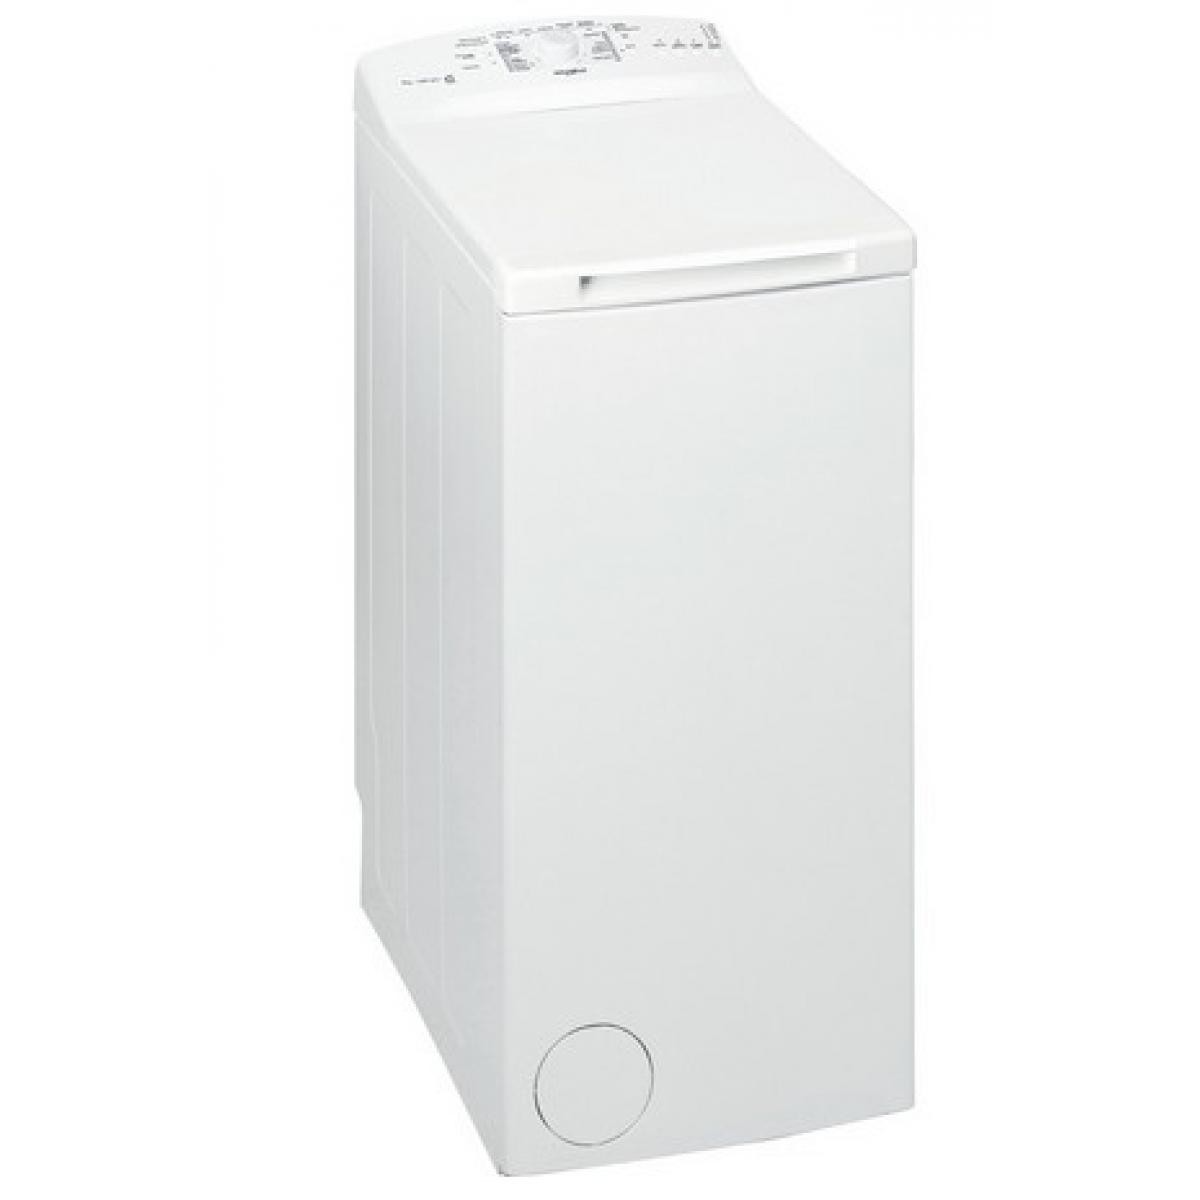 Whirlpool TDLR 7220LS SP/N washing machine